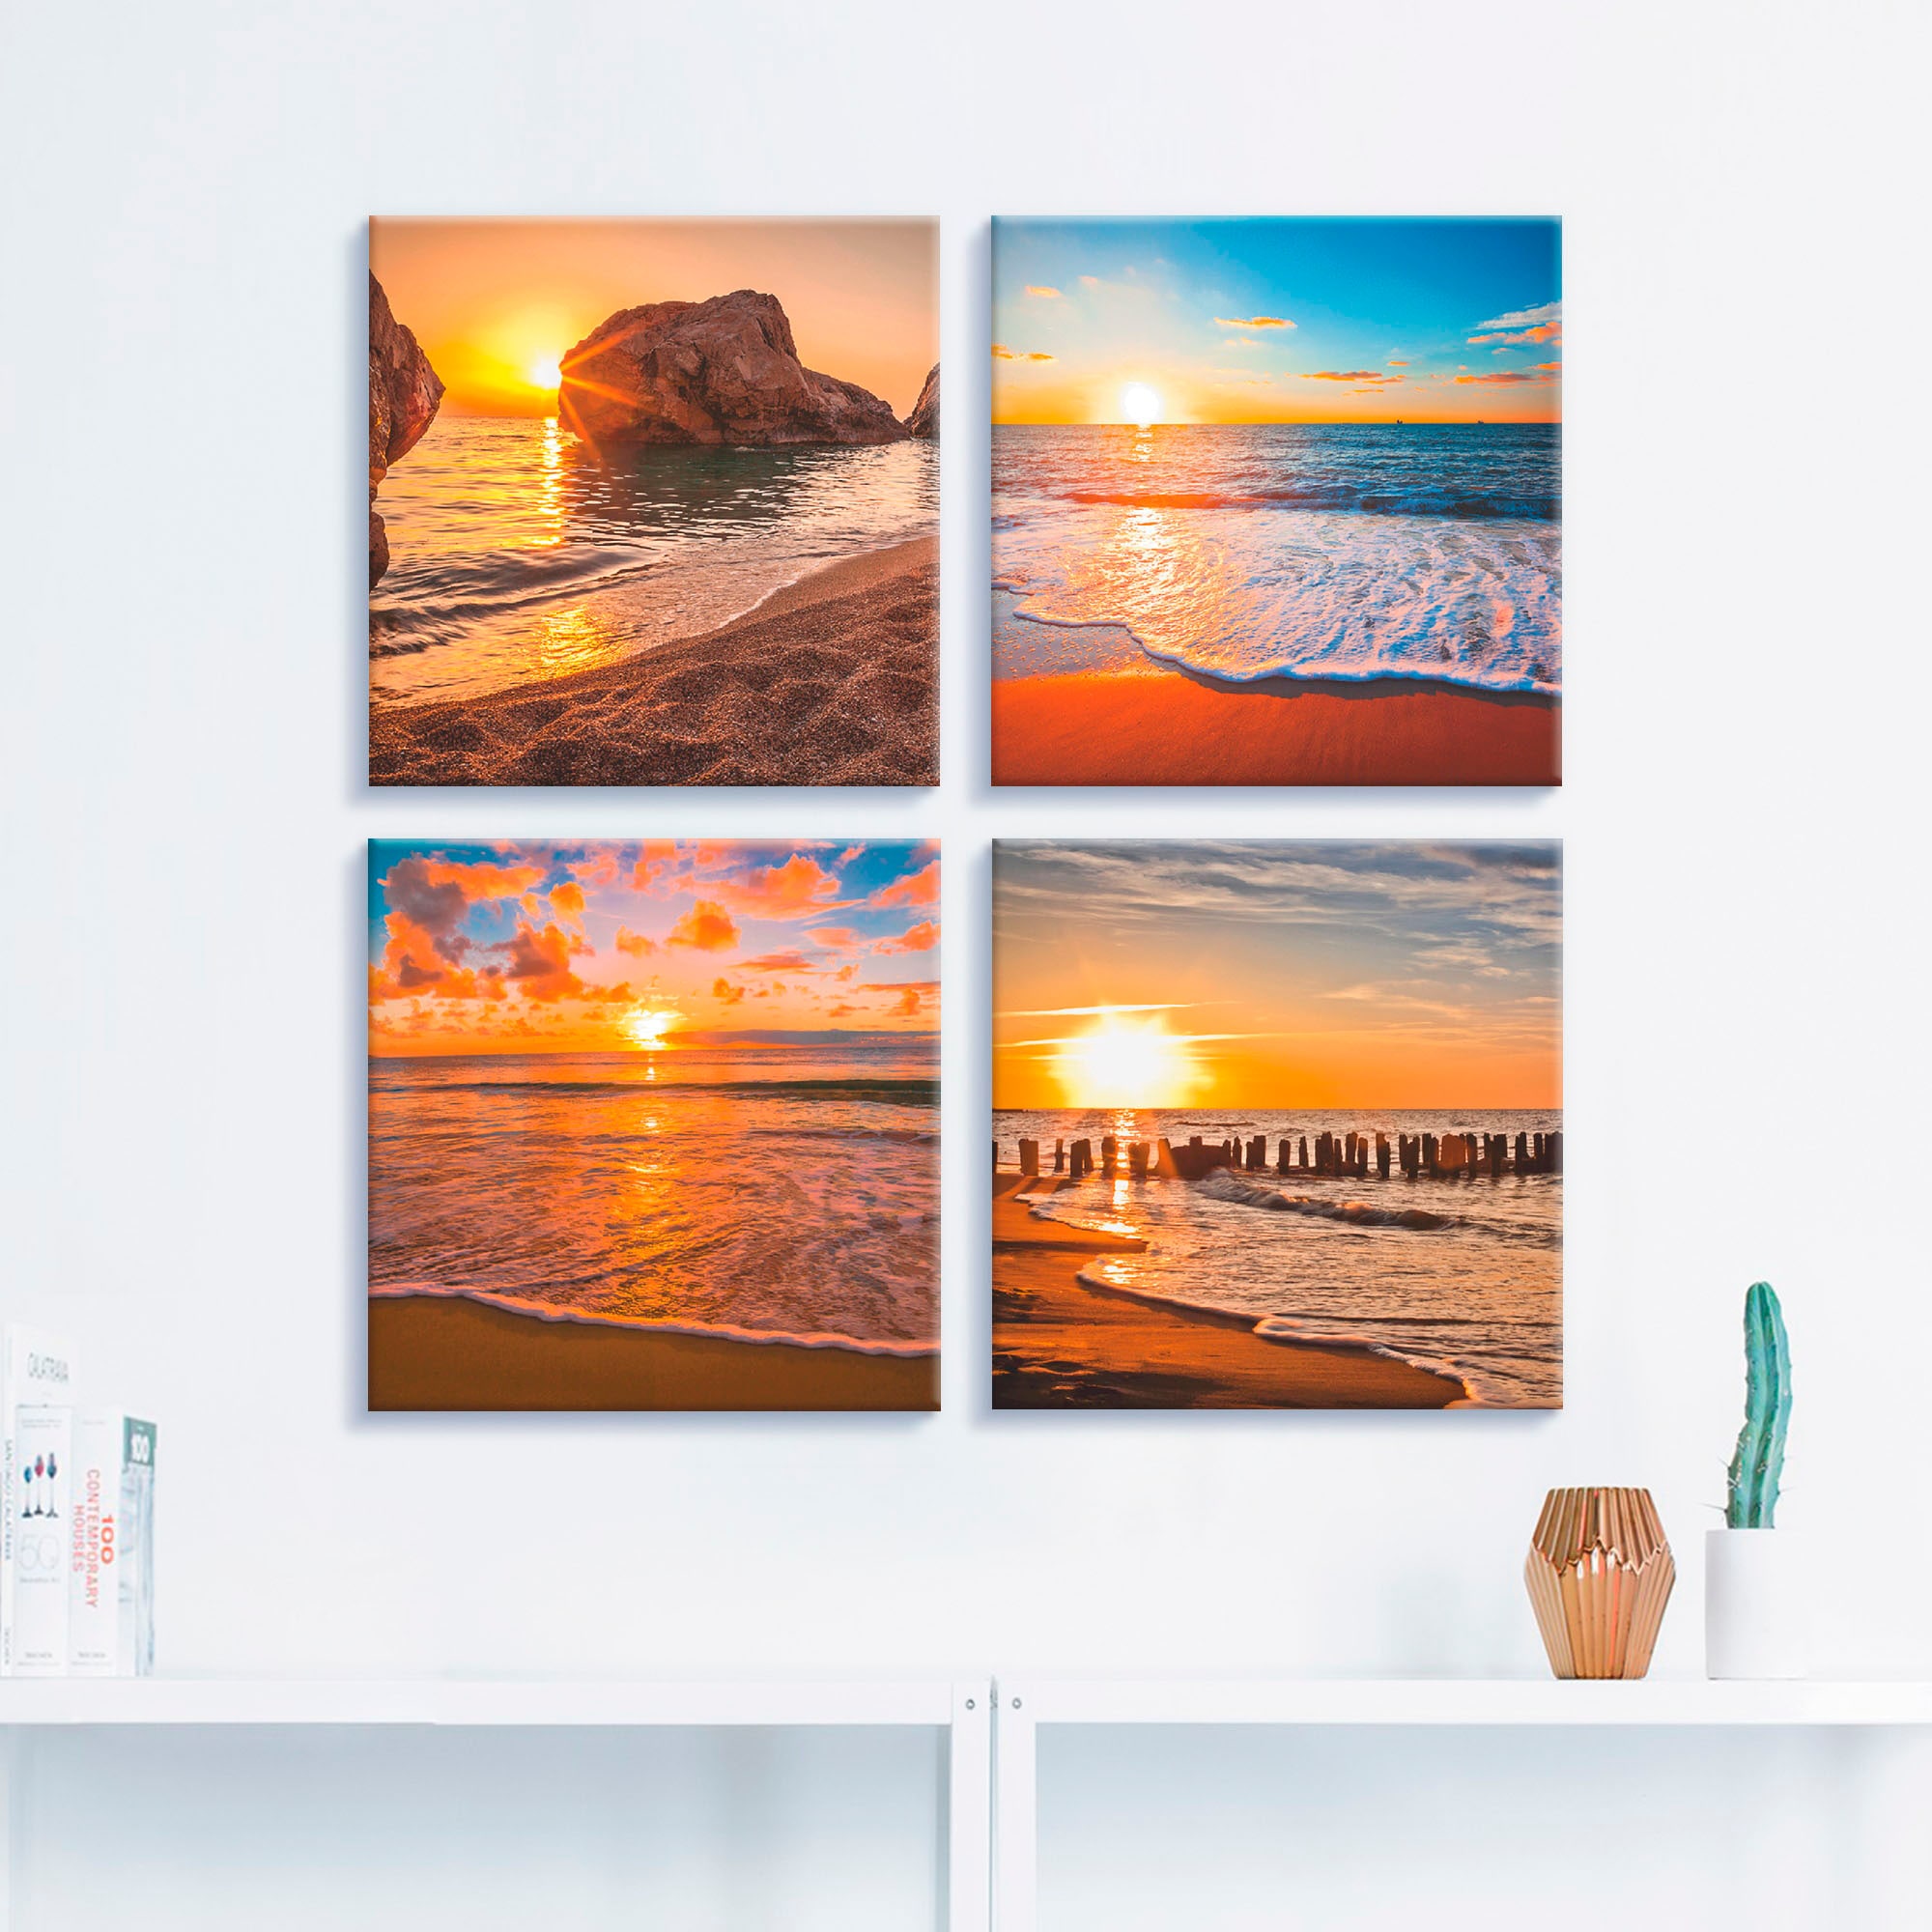 Artland Leinwandbild »Sonnenuntergänge am Strand Meer«, verschiedene Sonnenaufgang & -untergang, auf 4er bestellen Größen Set, (4 Rechnung St.), 